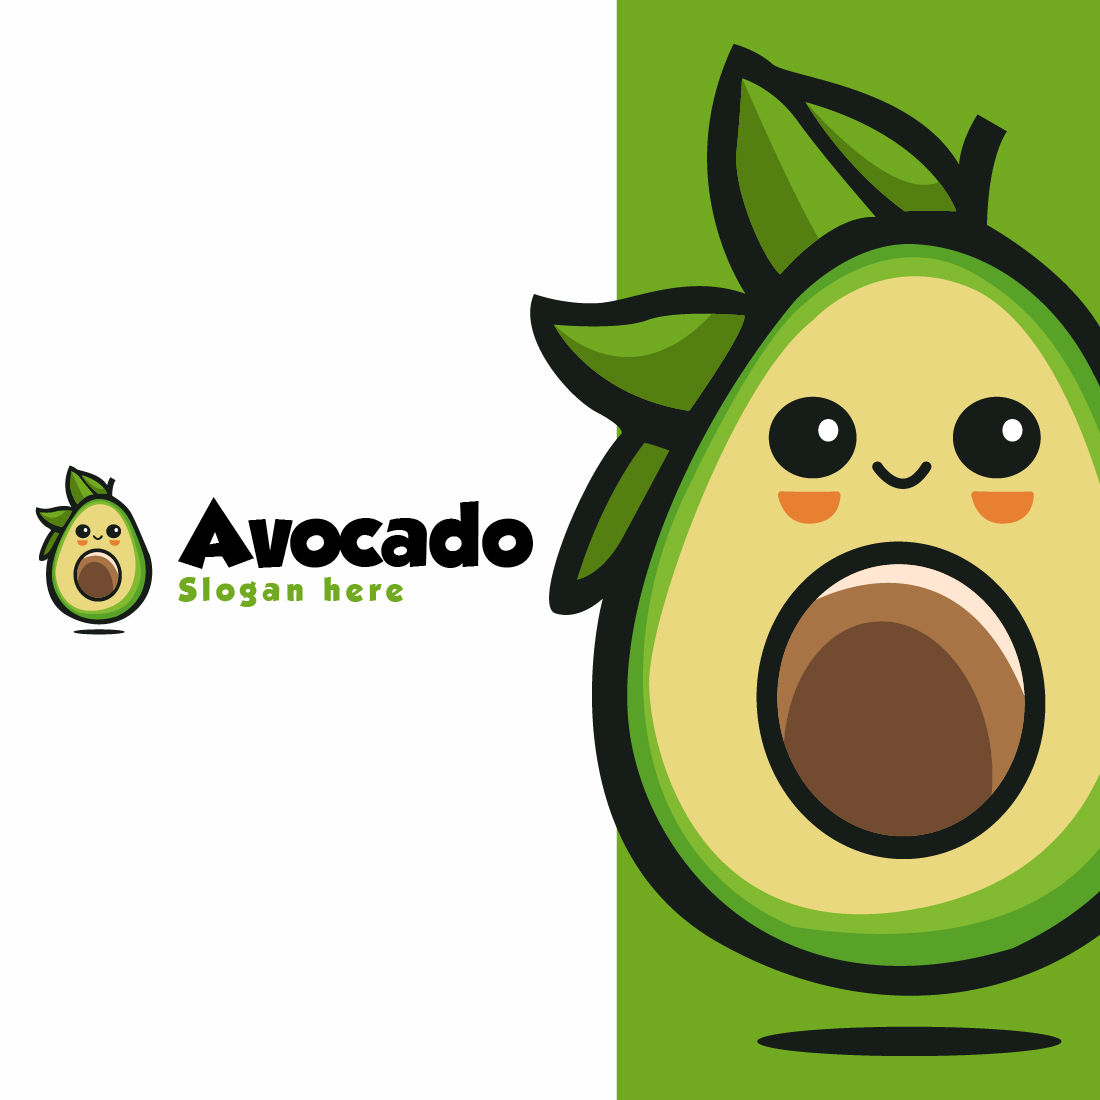 Cute Avocado Mascot logo Template preview image.